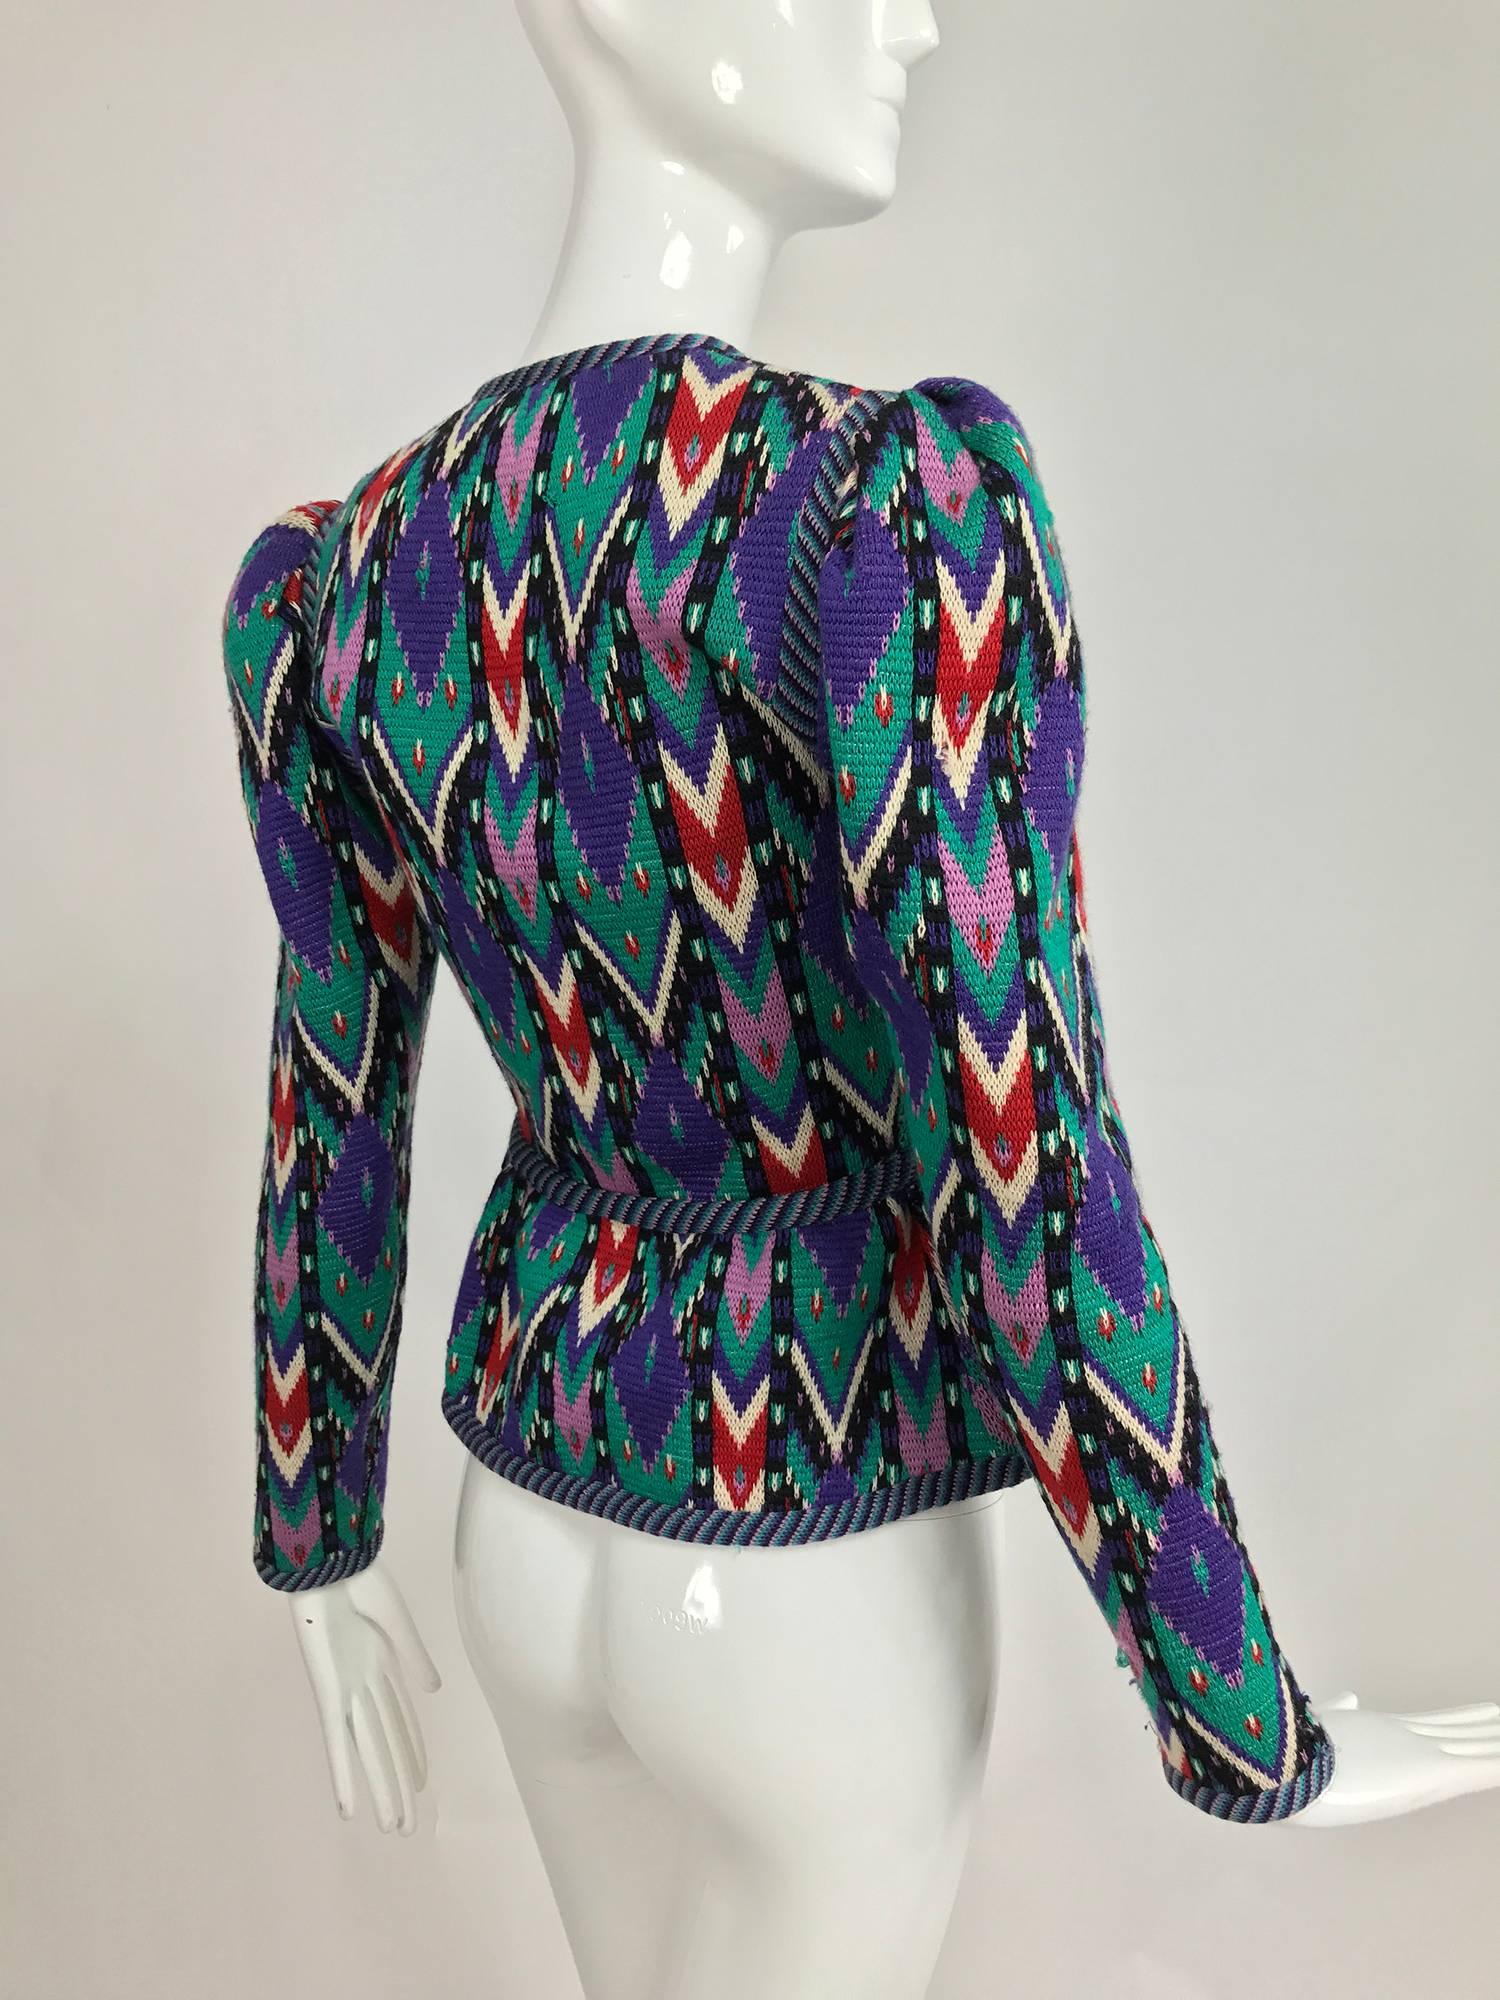 Yves Saint Laurent colourful geometric cardigan sweater 1970s 2